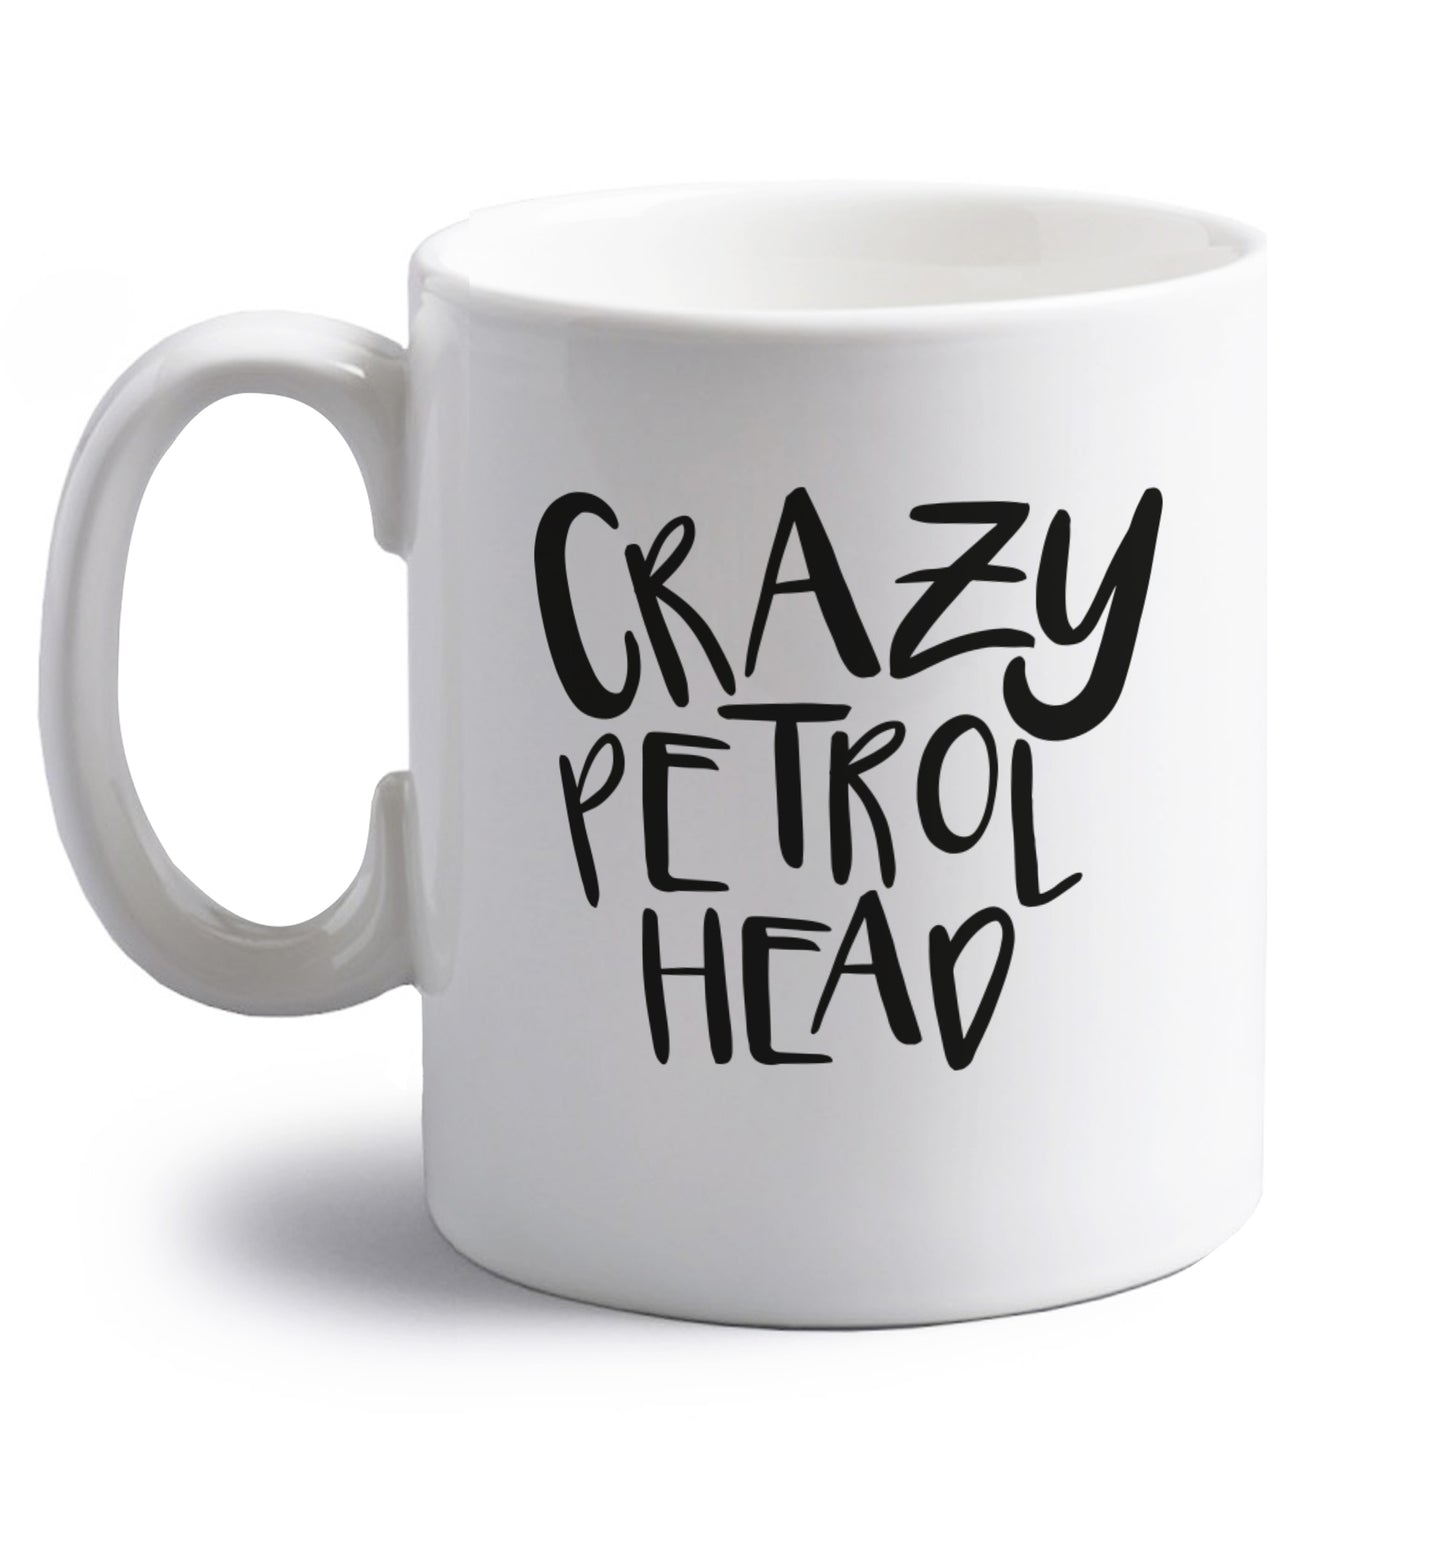 Crazy petrol head right handed white ceramic mug 